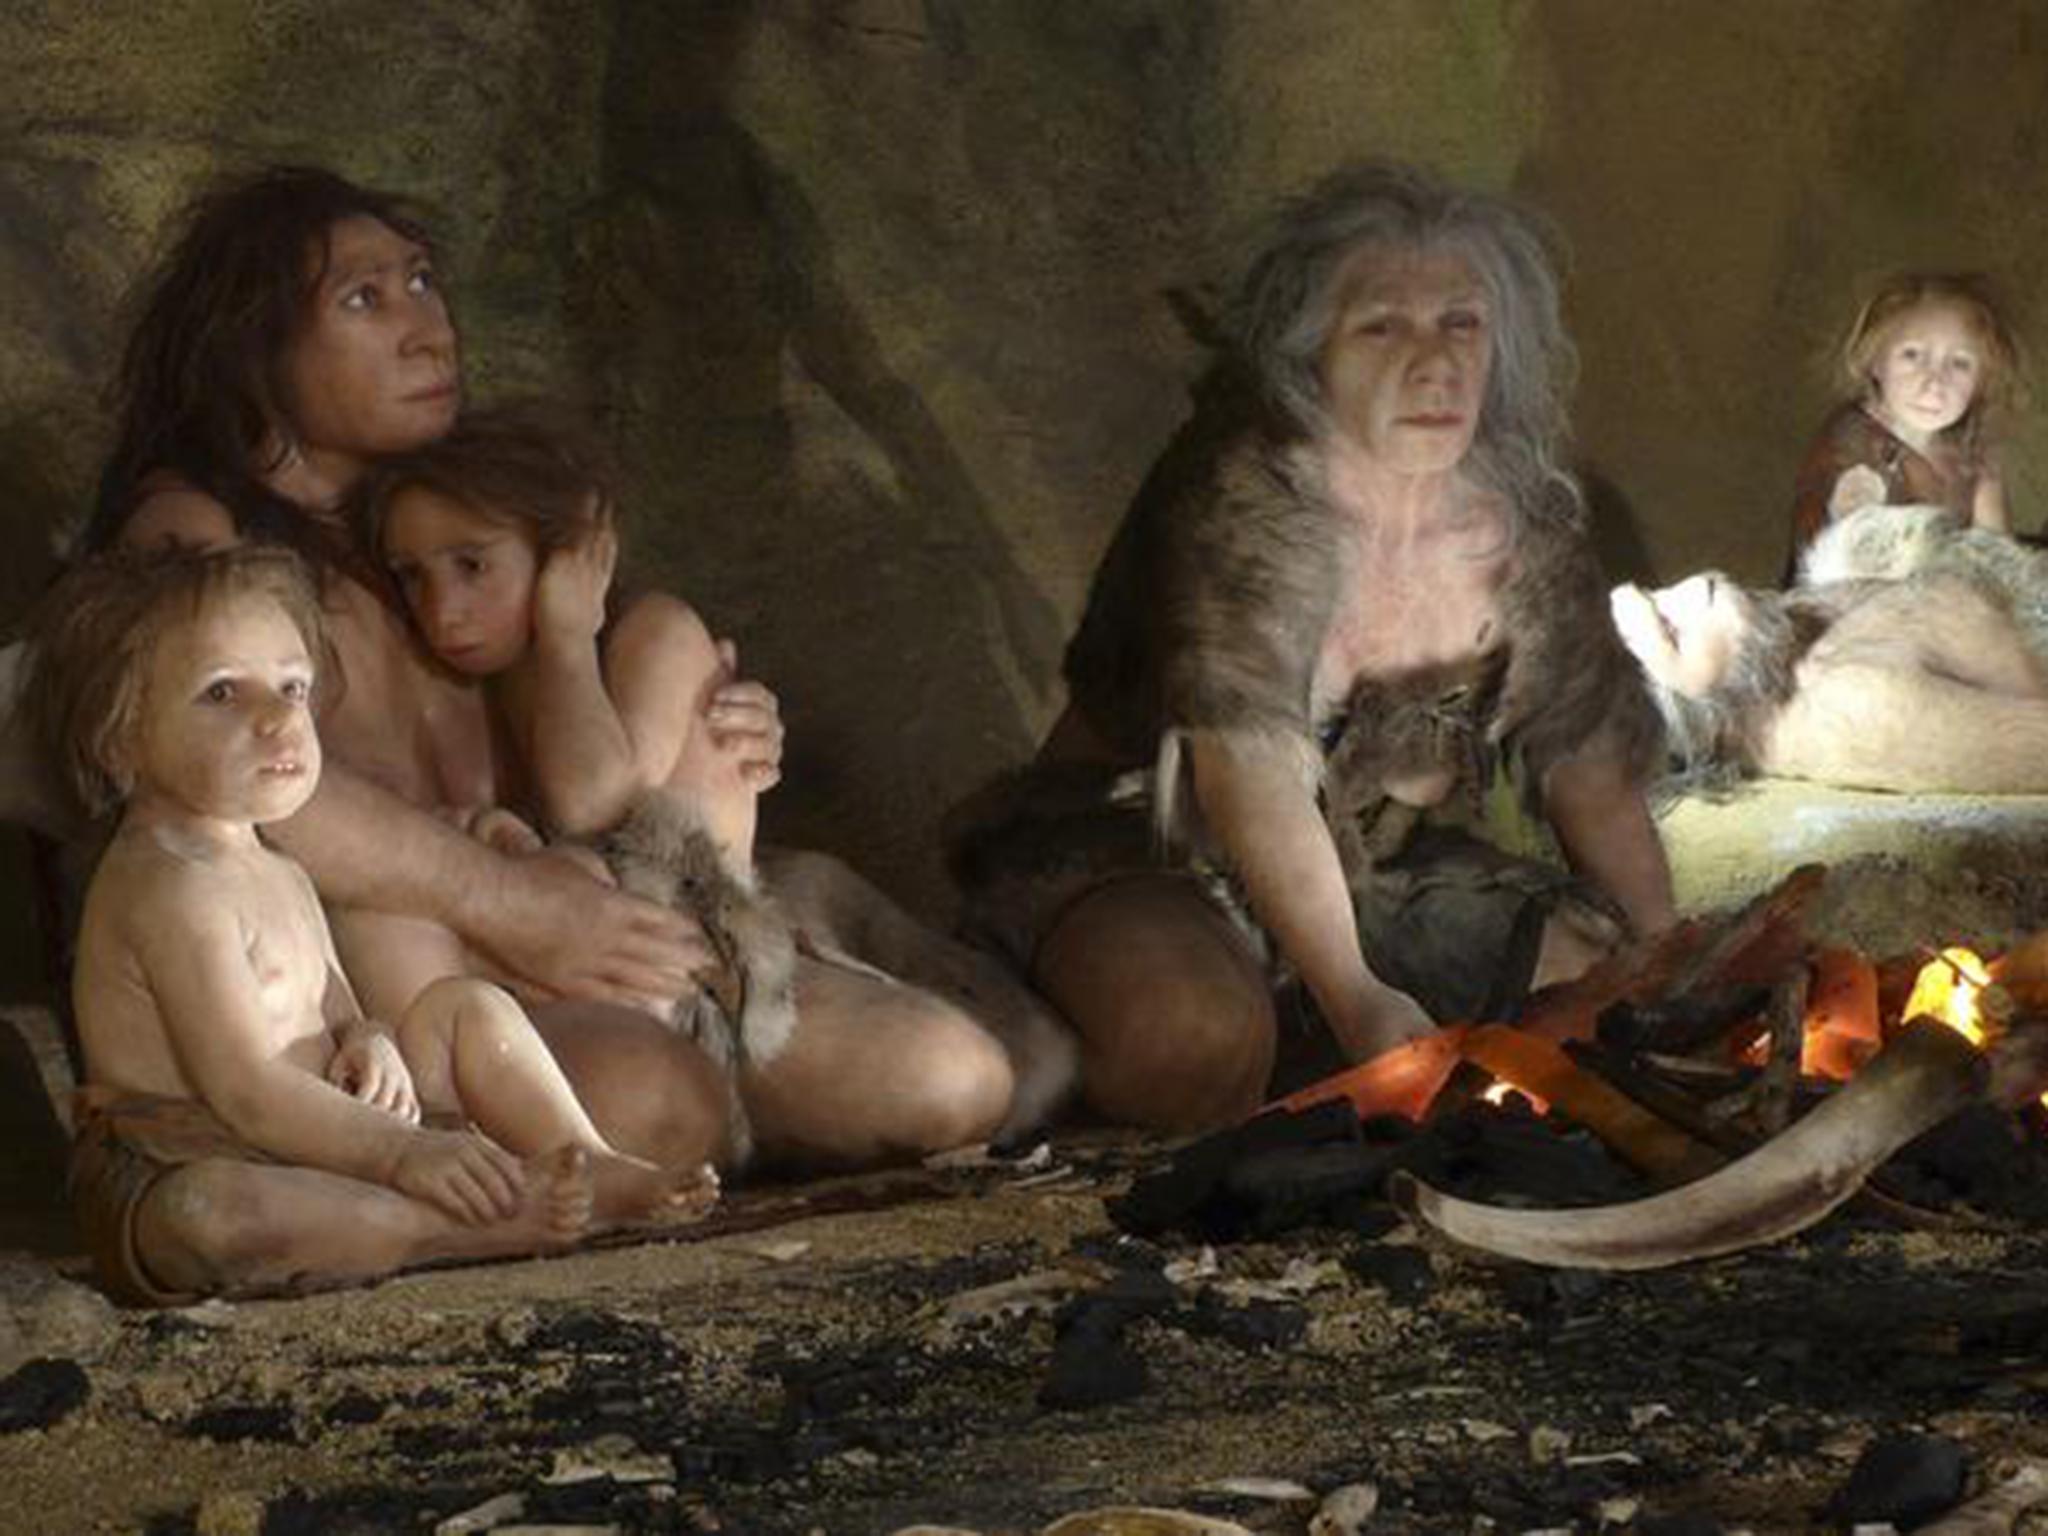 neanderthals and humans interbreeding